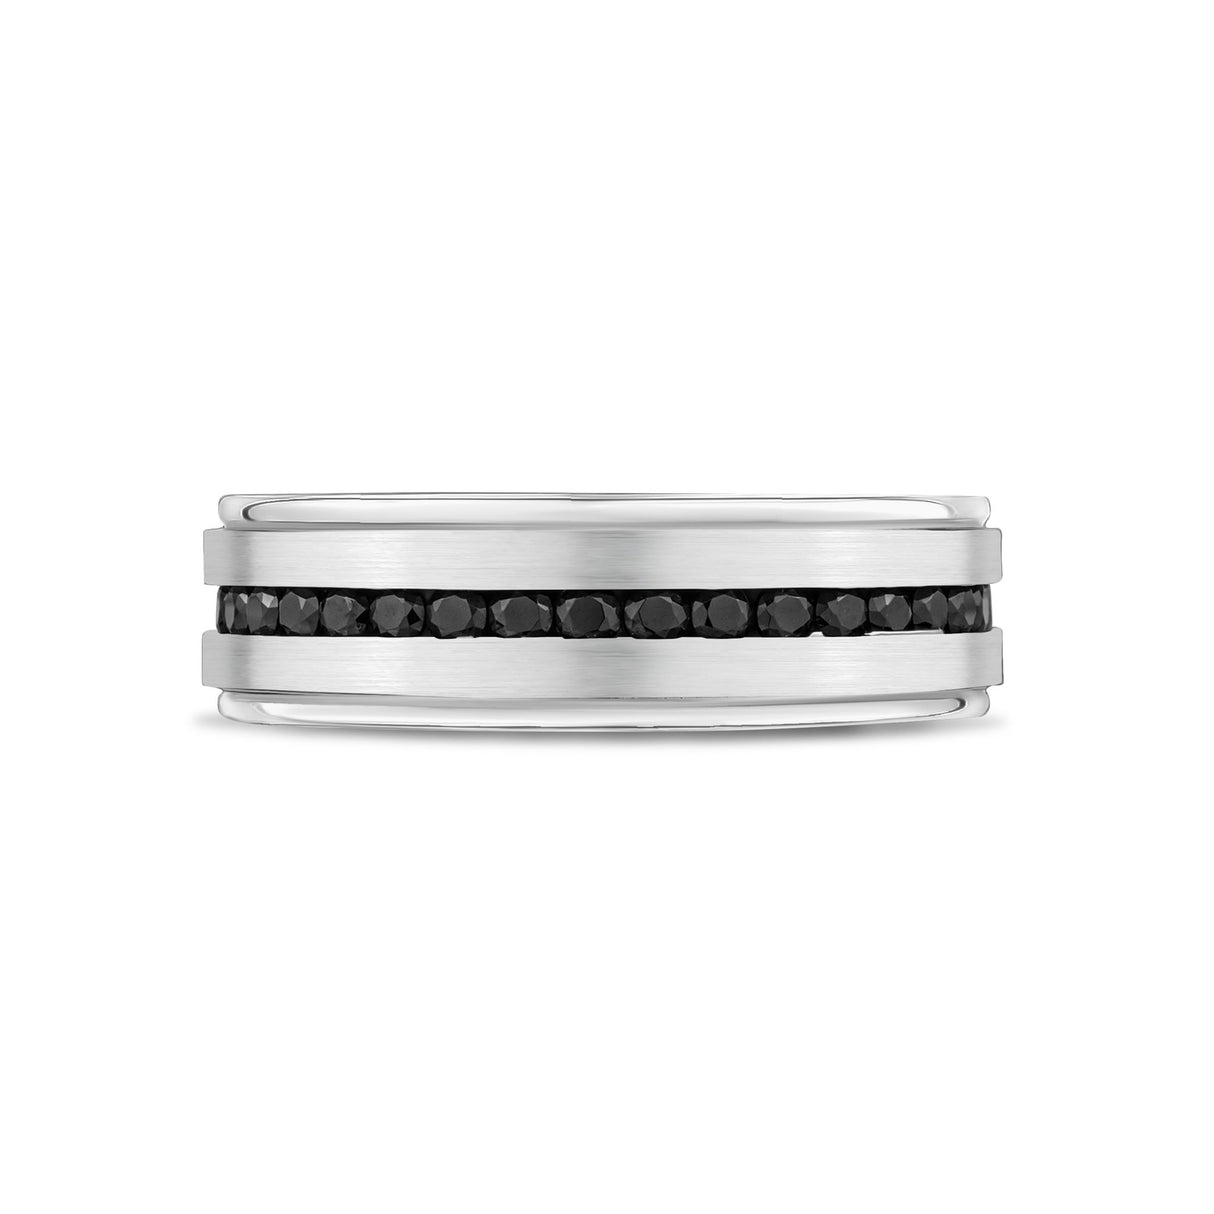 Men Ring - Black Stone Matte Steel Engravable Band Ring